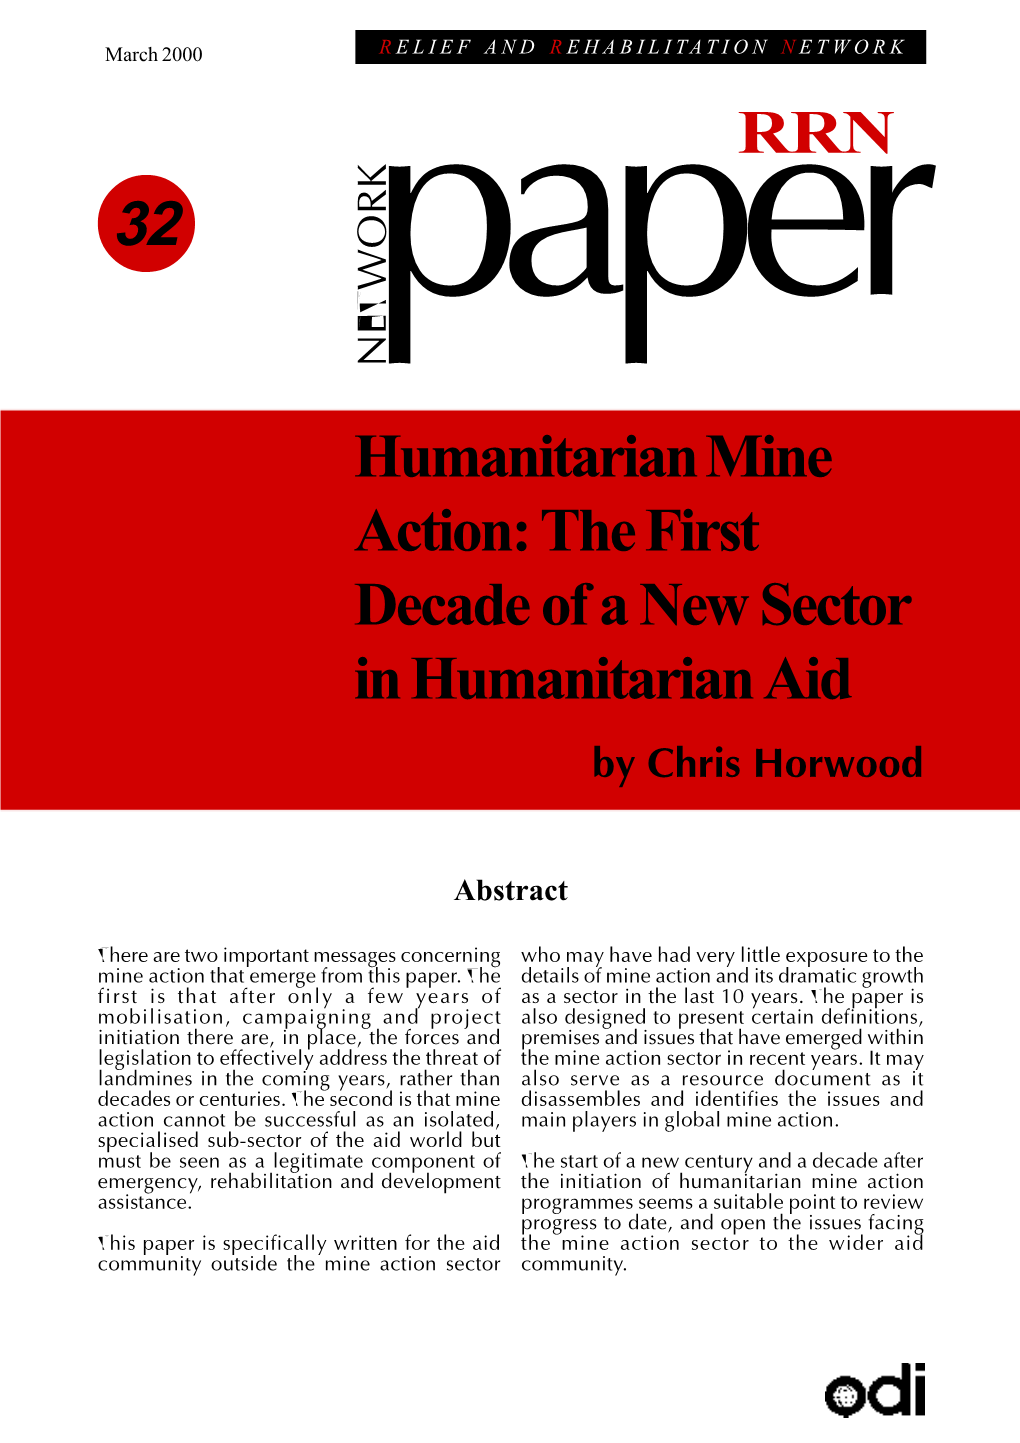 RRN Humanitarian Mine Action